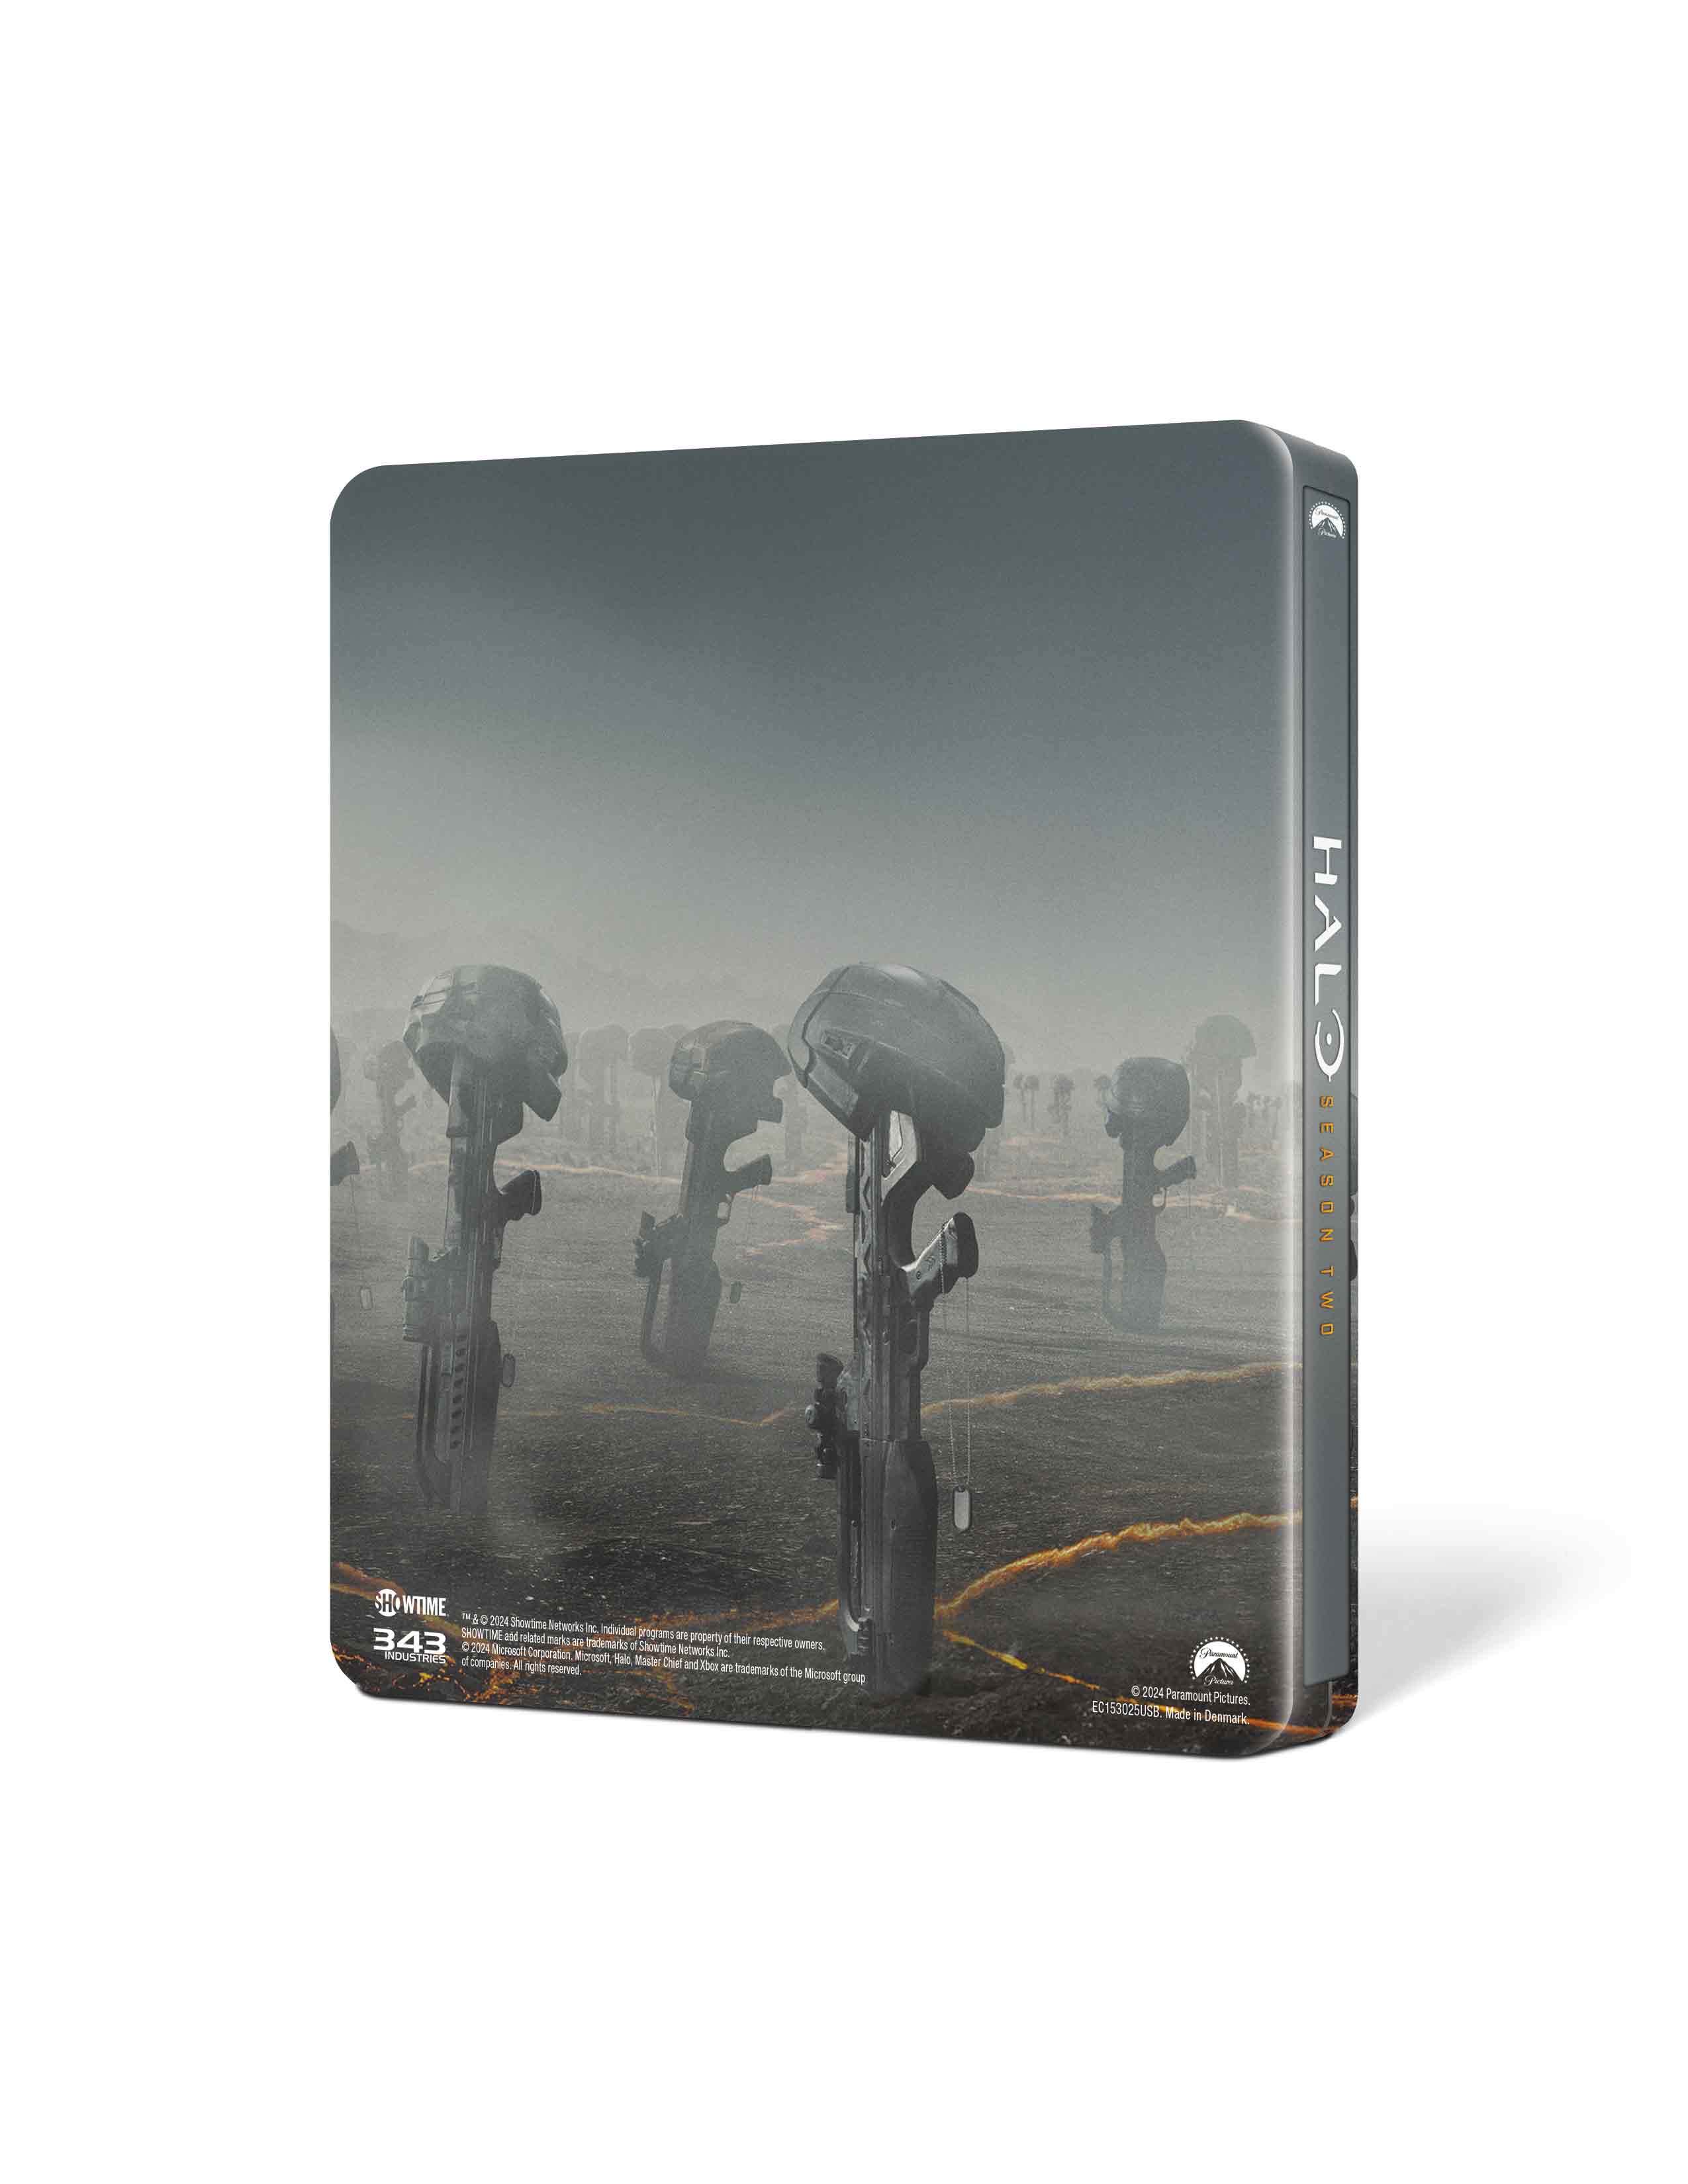 Halo - Stagione 2 - Steelbook 4 4K Ultra HD (Blu-ray) Image 3